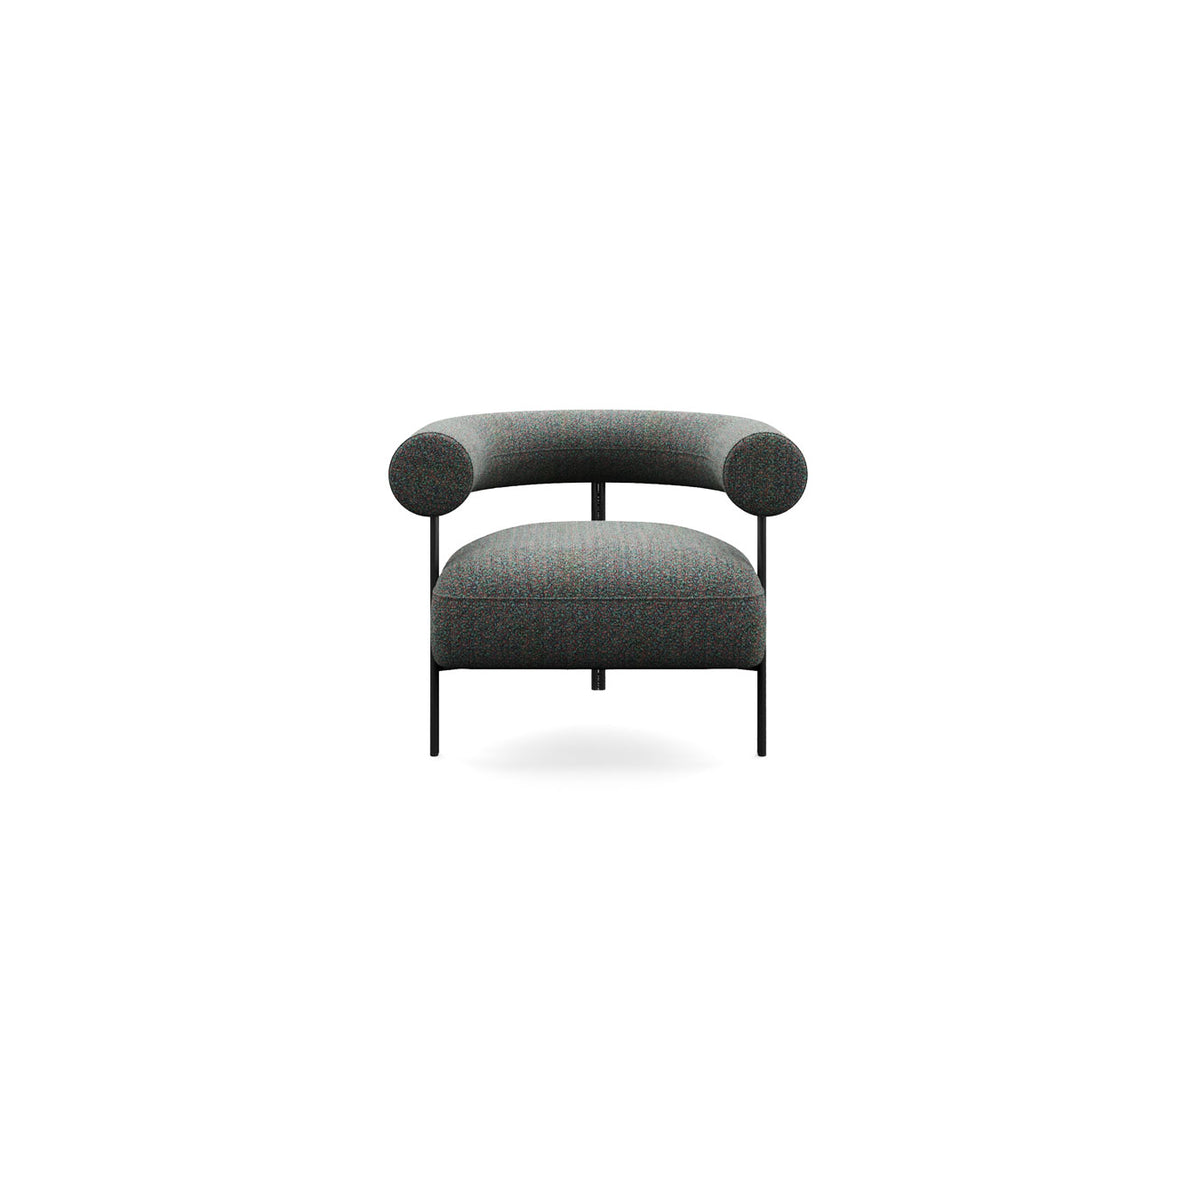 Toro - Liu Jo Living - Modern Furniture | Contemporary Furniture - italydesign